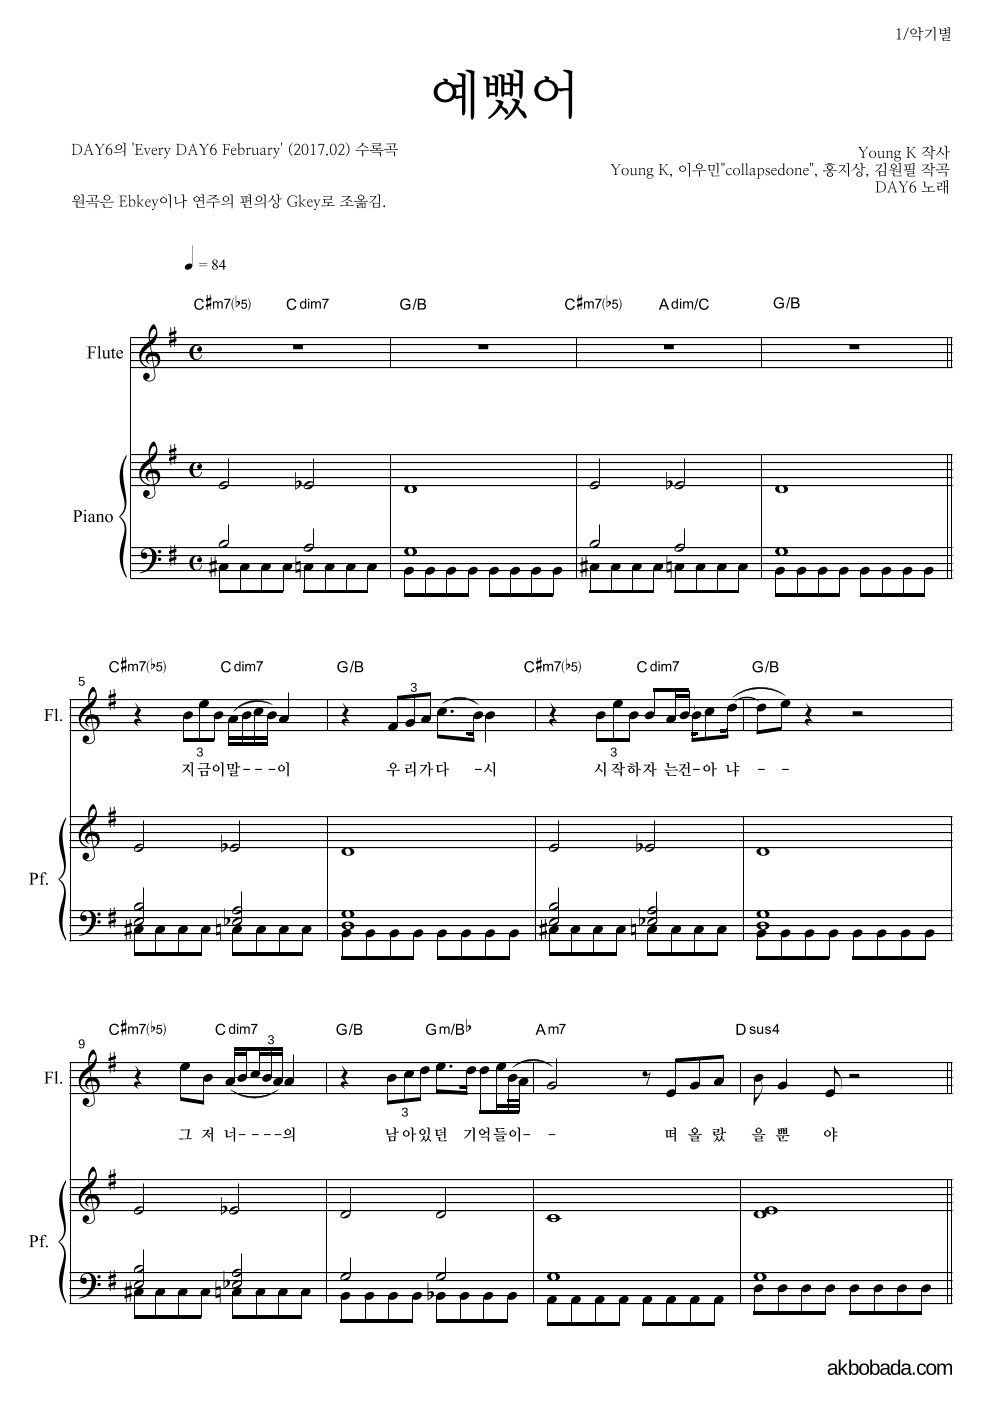 DAY6 - 예뻤어 플룻&피아노 악보 